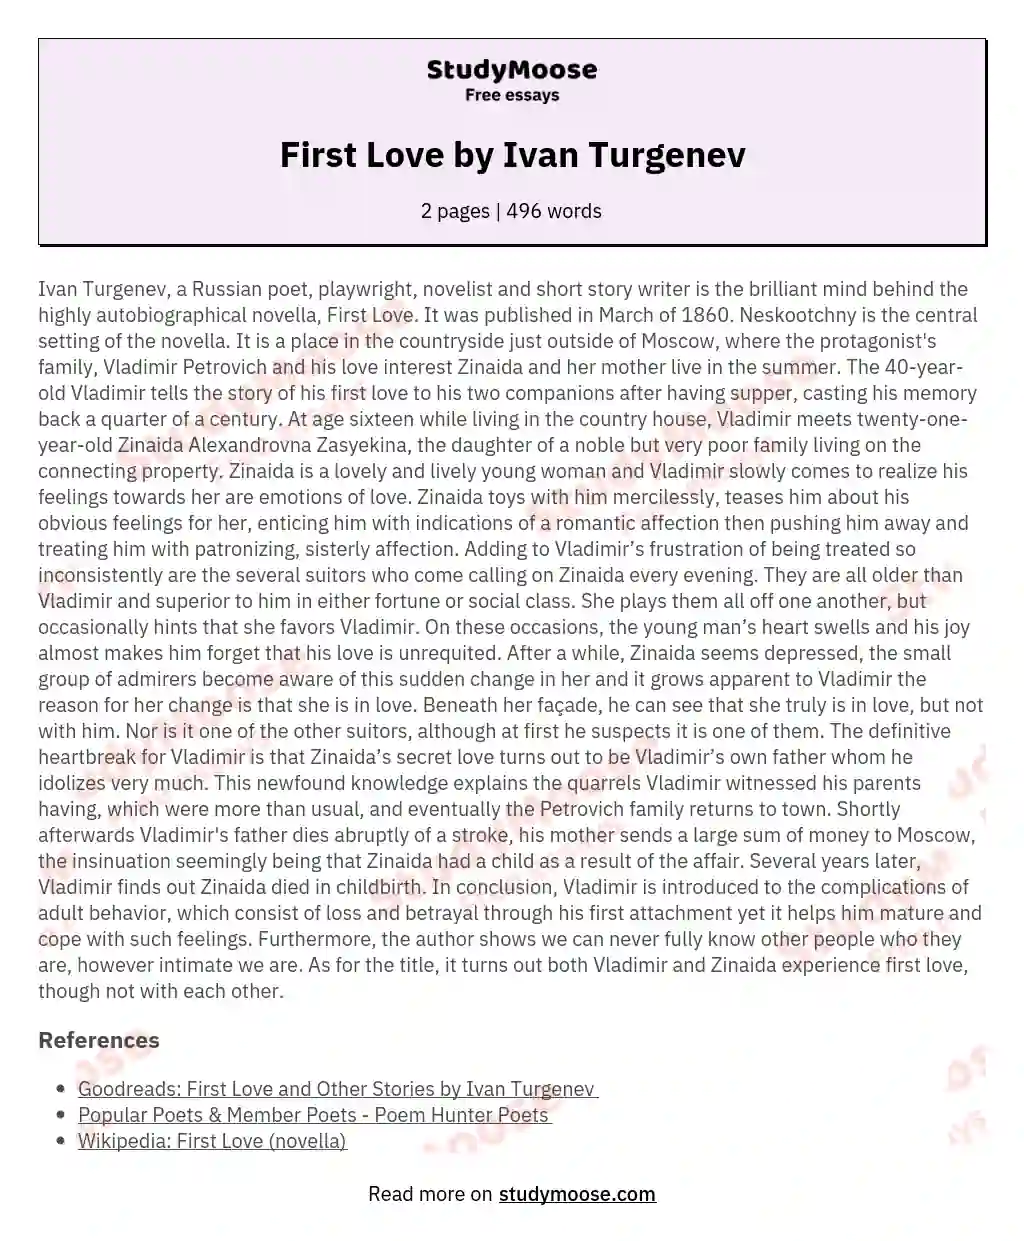 First Love by Ivan Turgenev essay